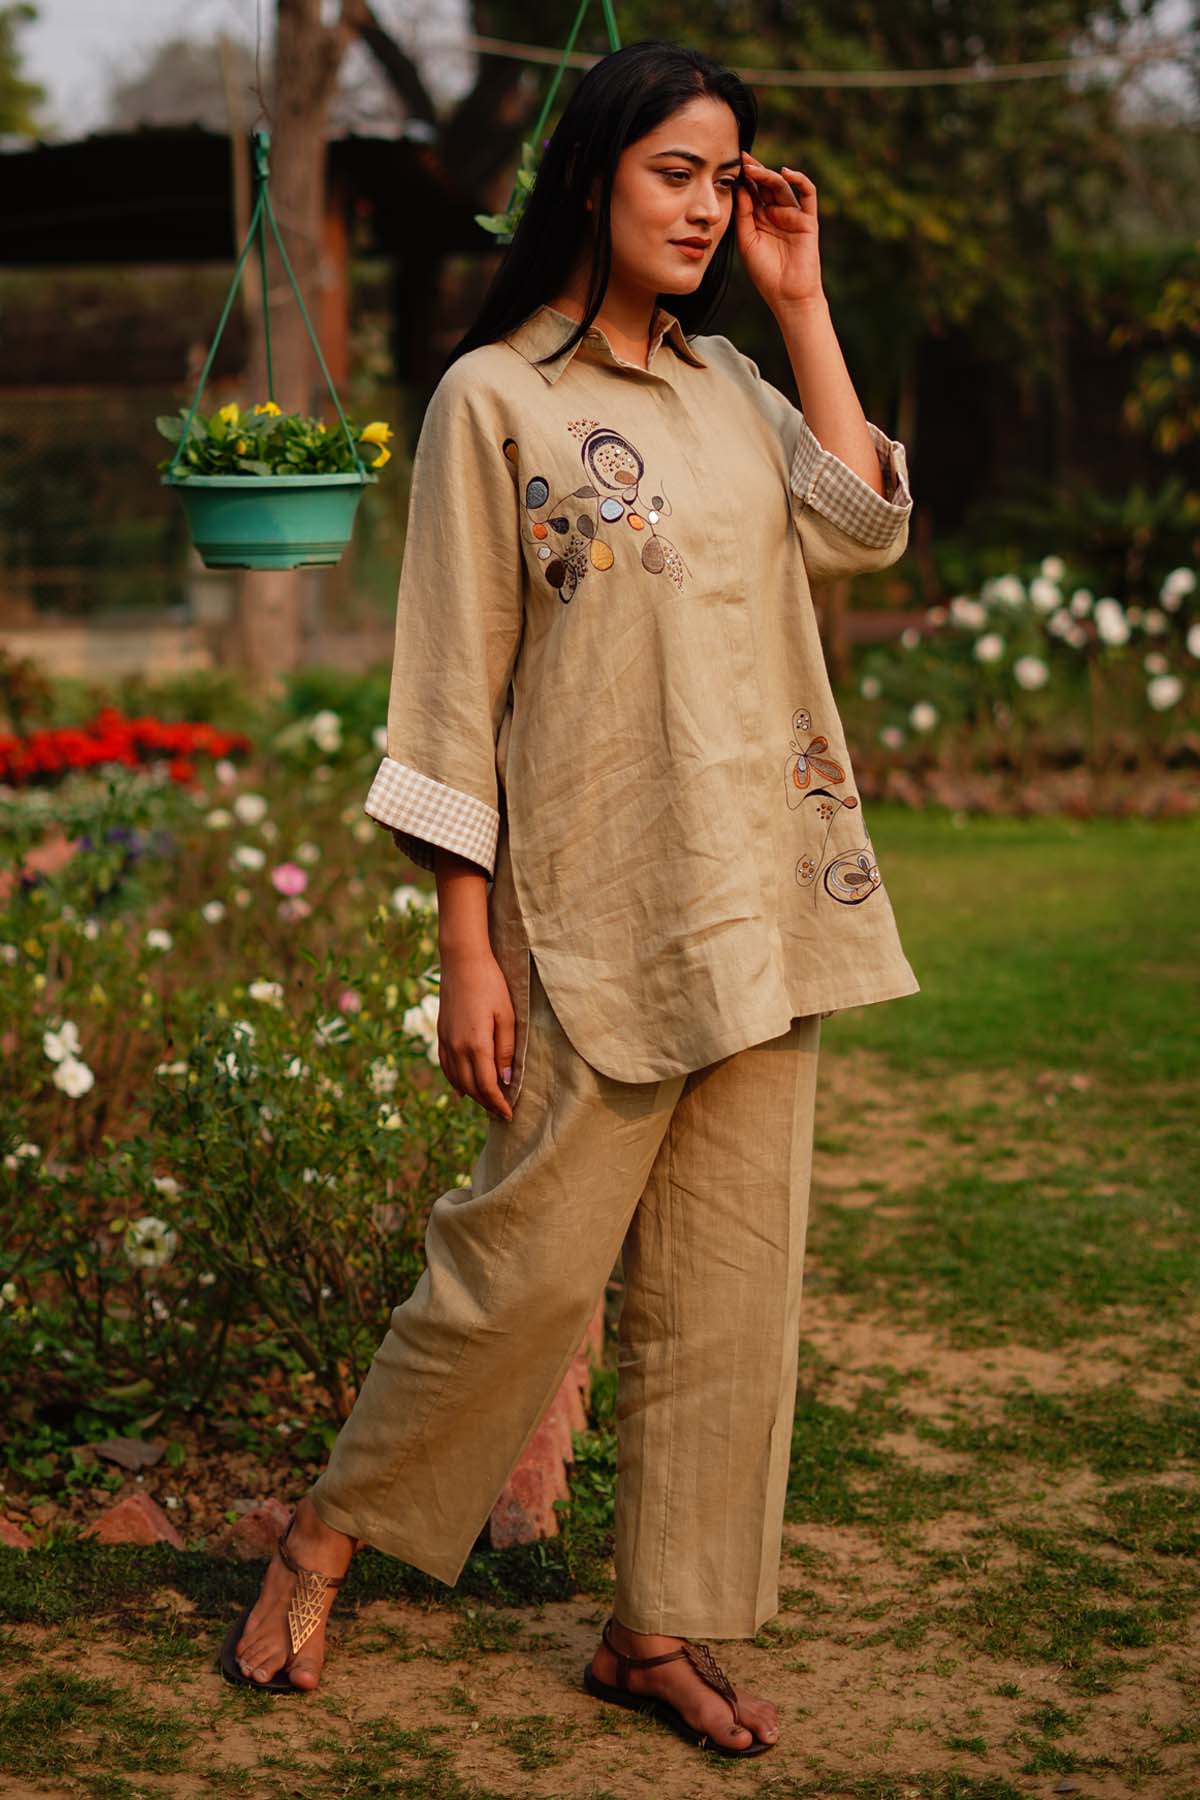 Designer Linen Bloom Light Sage Linen Shirt with Delicate Embroidery For Women Online at ScrollnShops